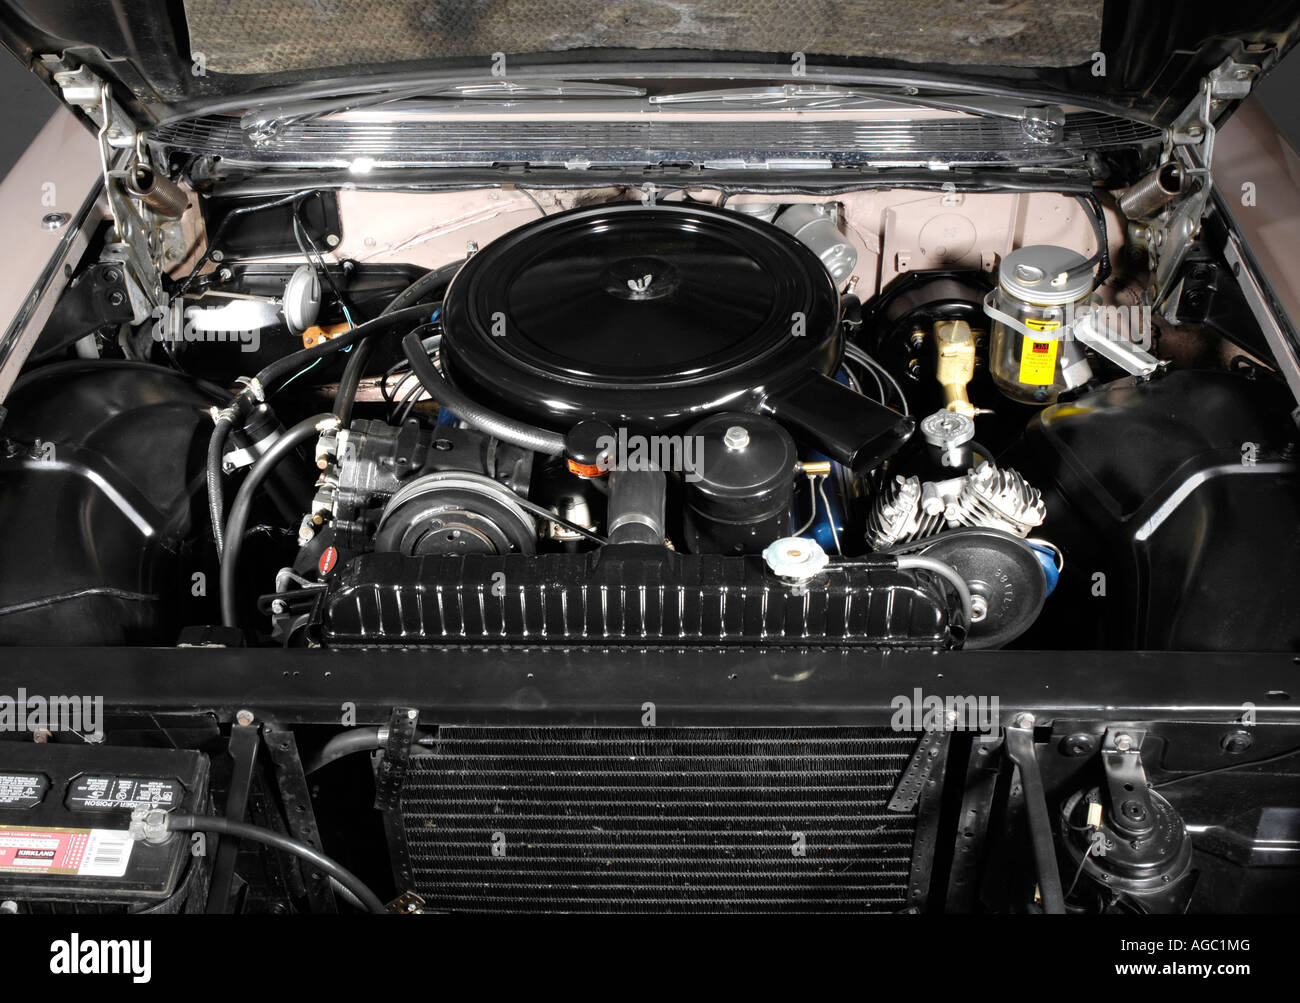 1959 Cadillac Coupe De Ville Engine Stock Photo